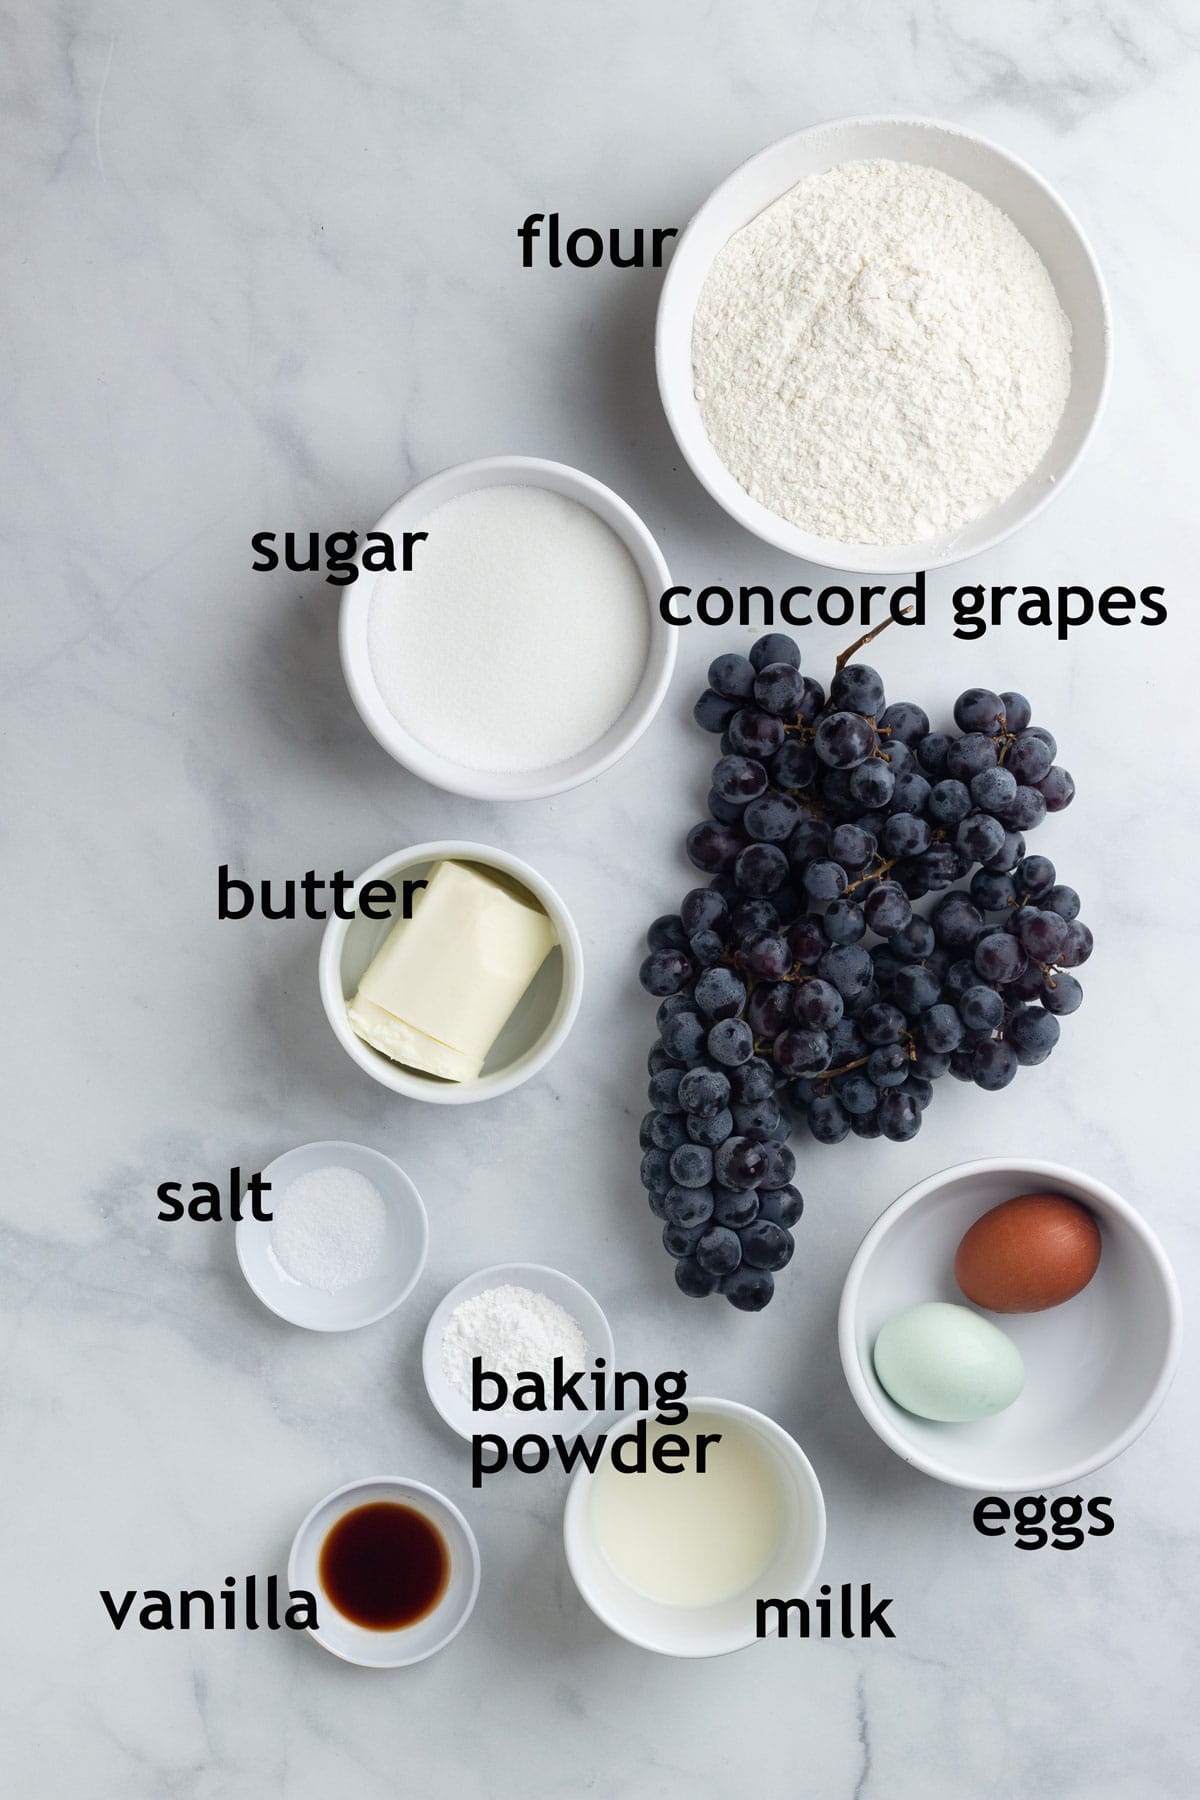 Ingredients including flour, sugar, butter, grapes, baking powder, salt, eggs, milk and vanilla.